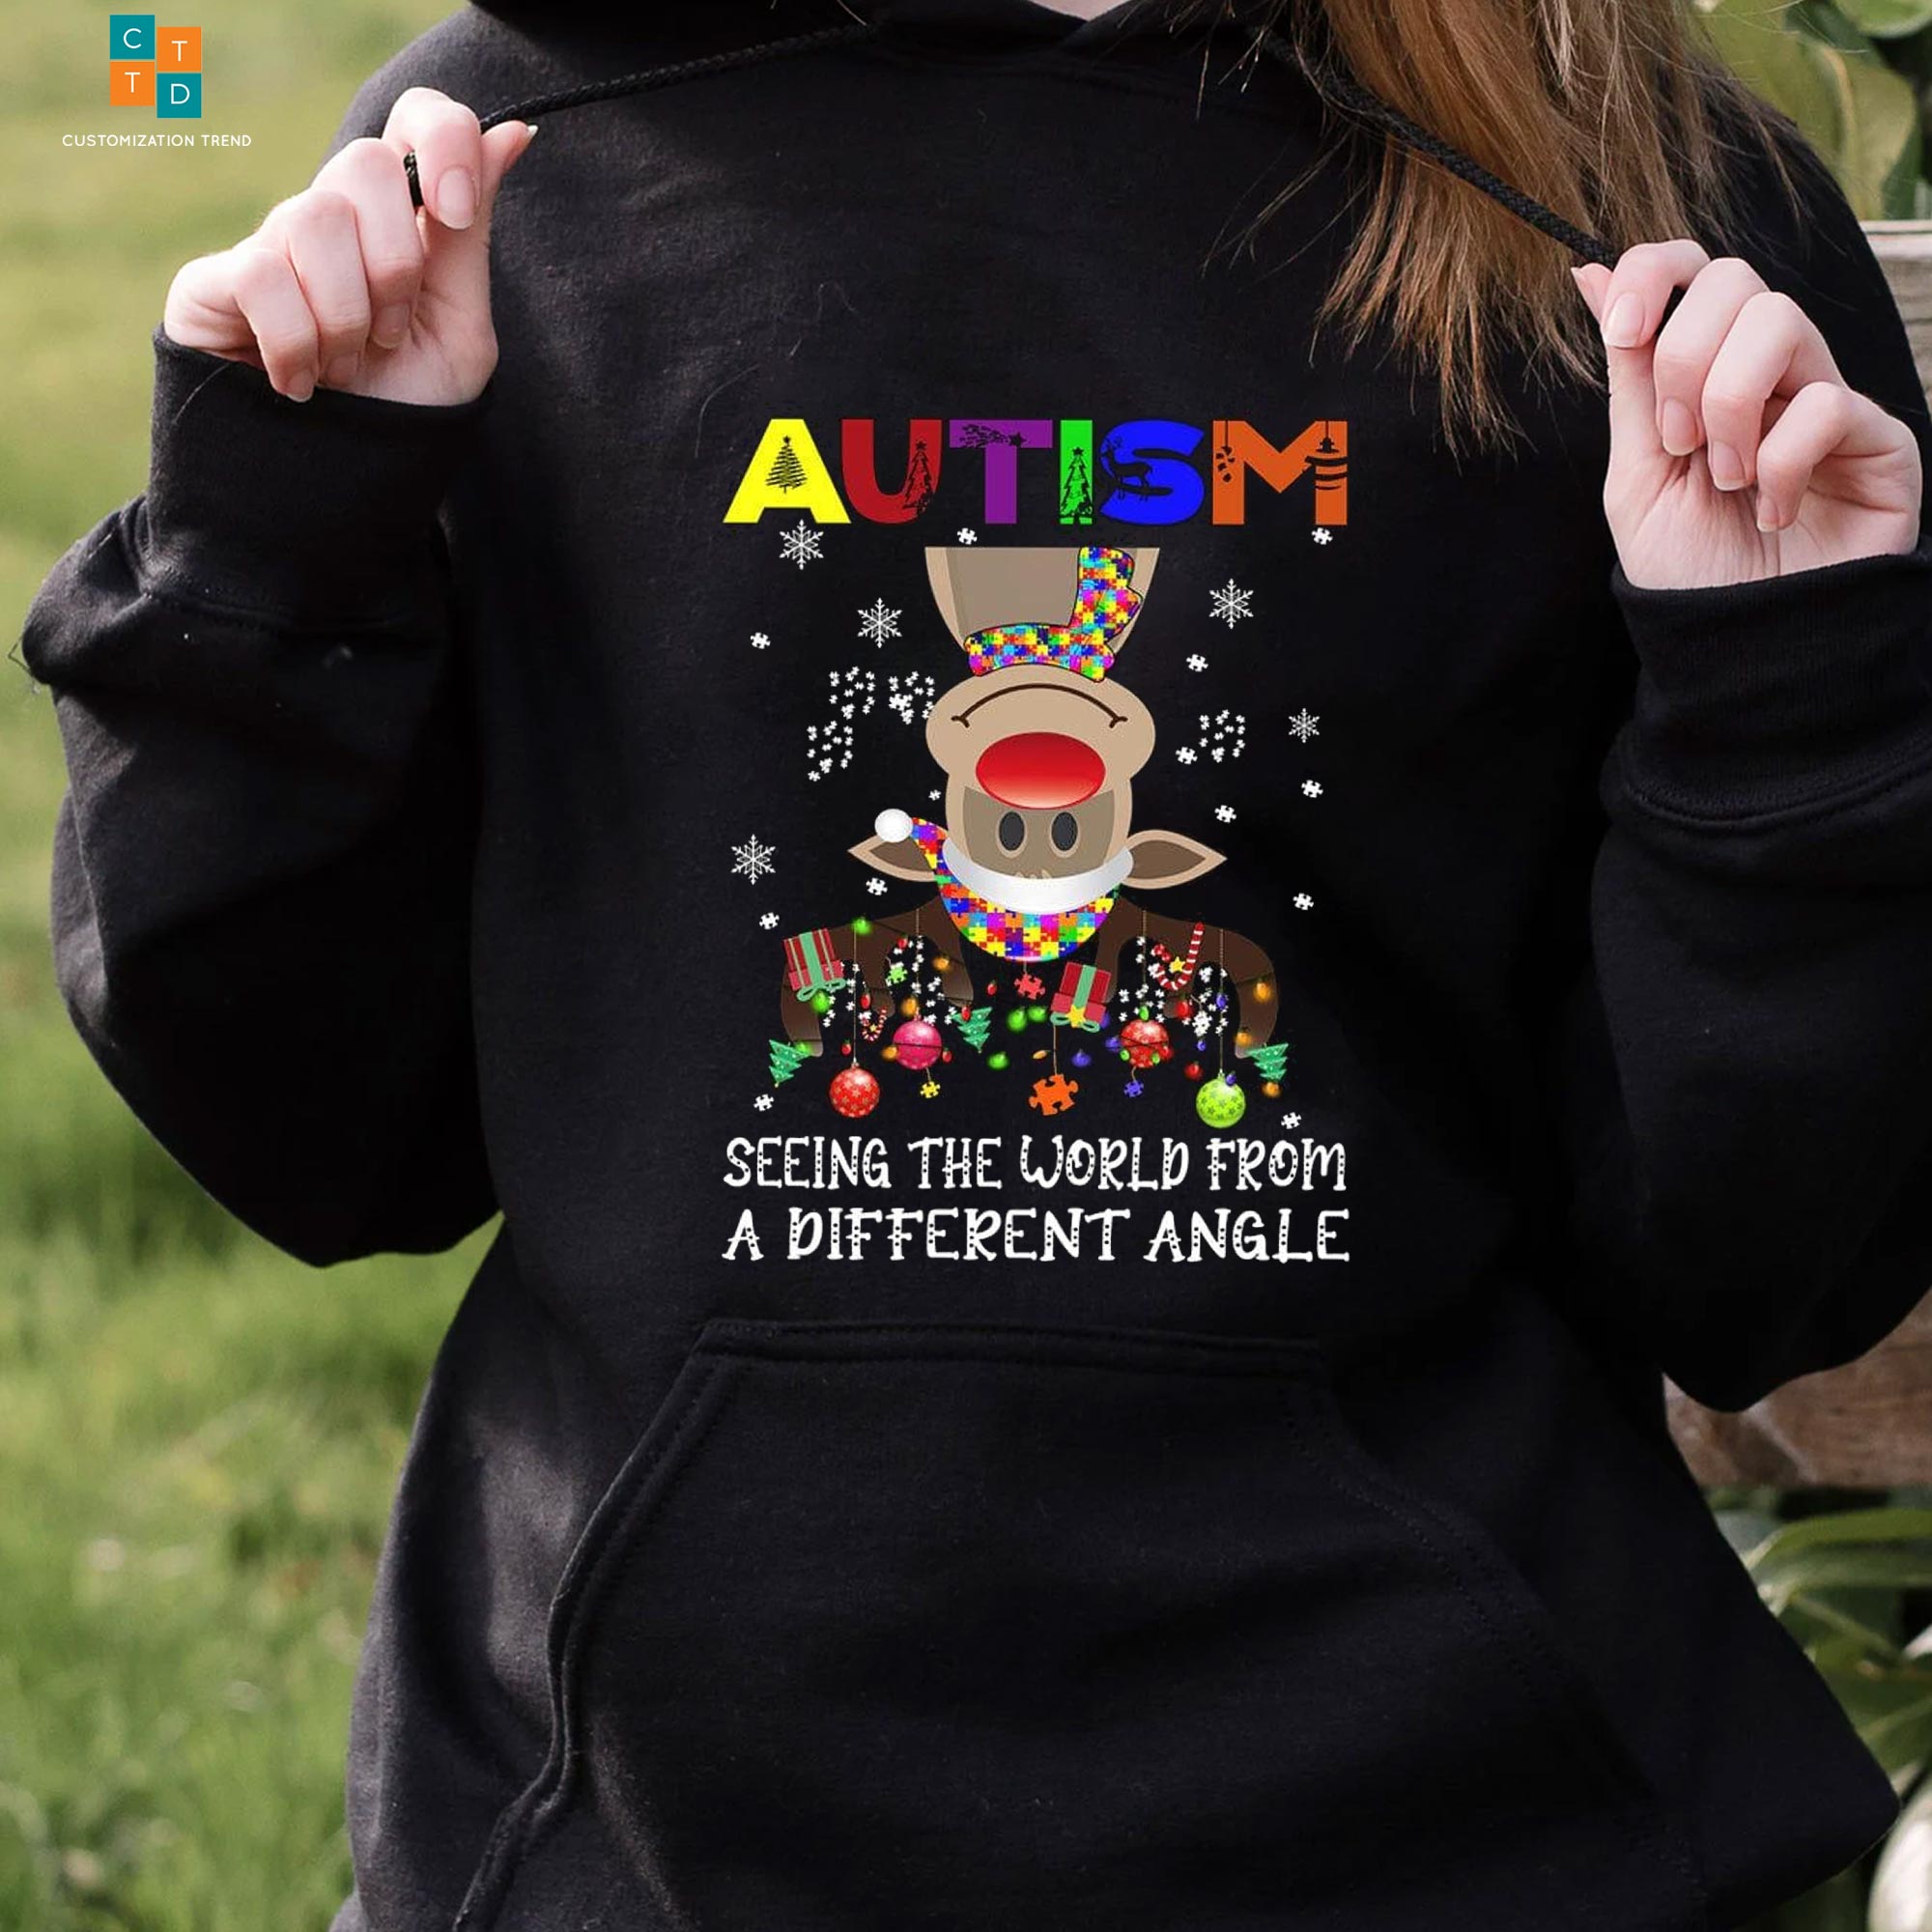 Autism Spectrum Hoodie, Shirt